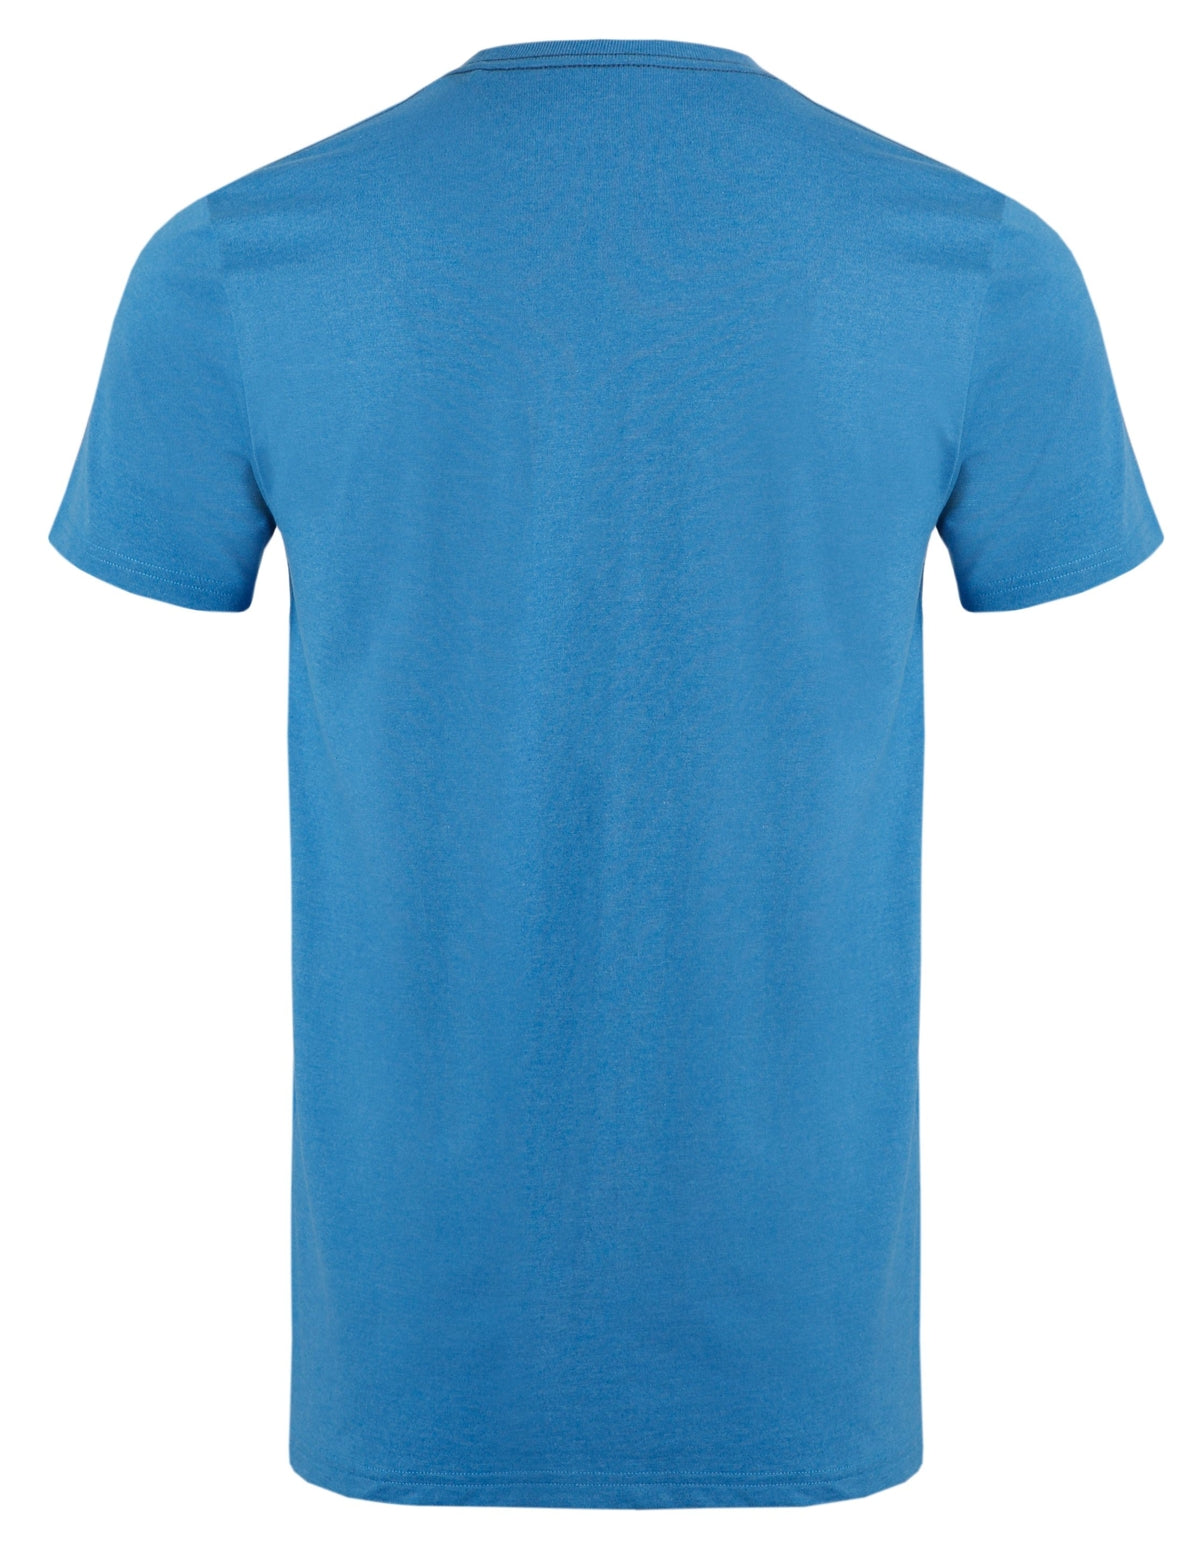 Weird Fish Mens 'Waves' Printed T-Shirt - Blue Sapphire